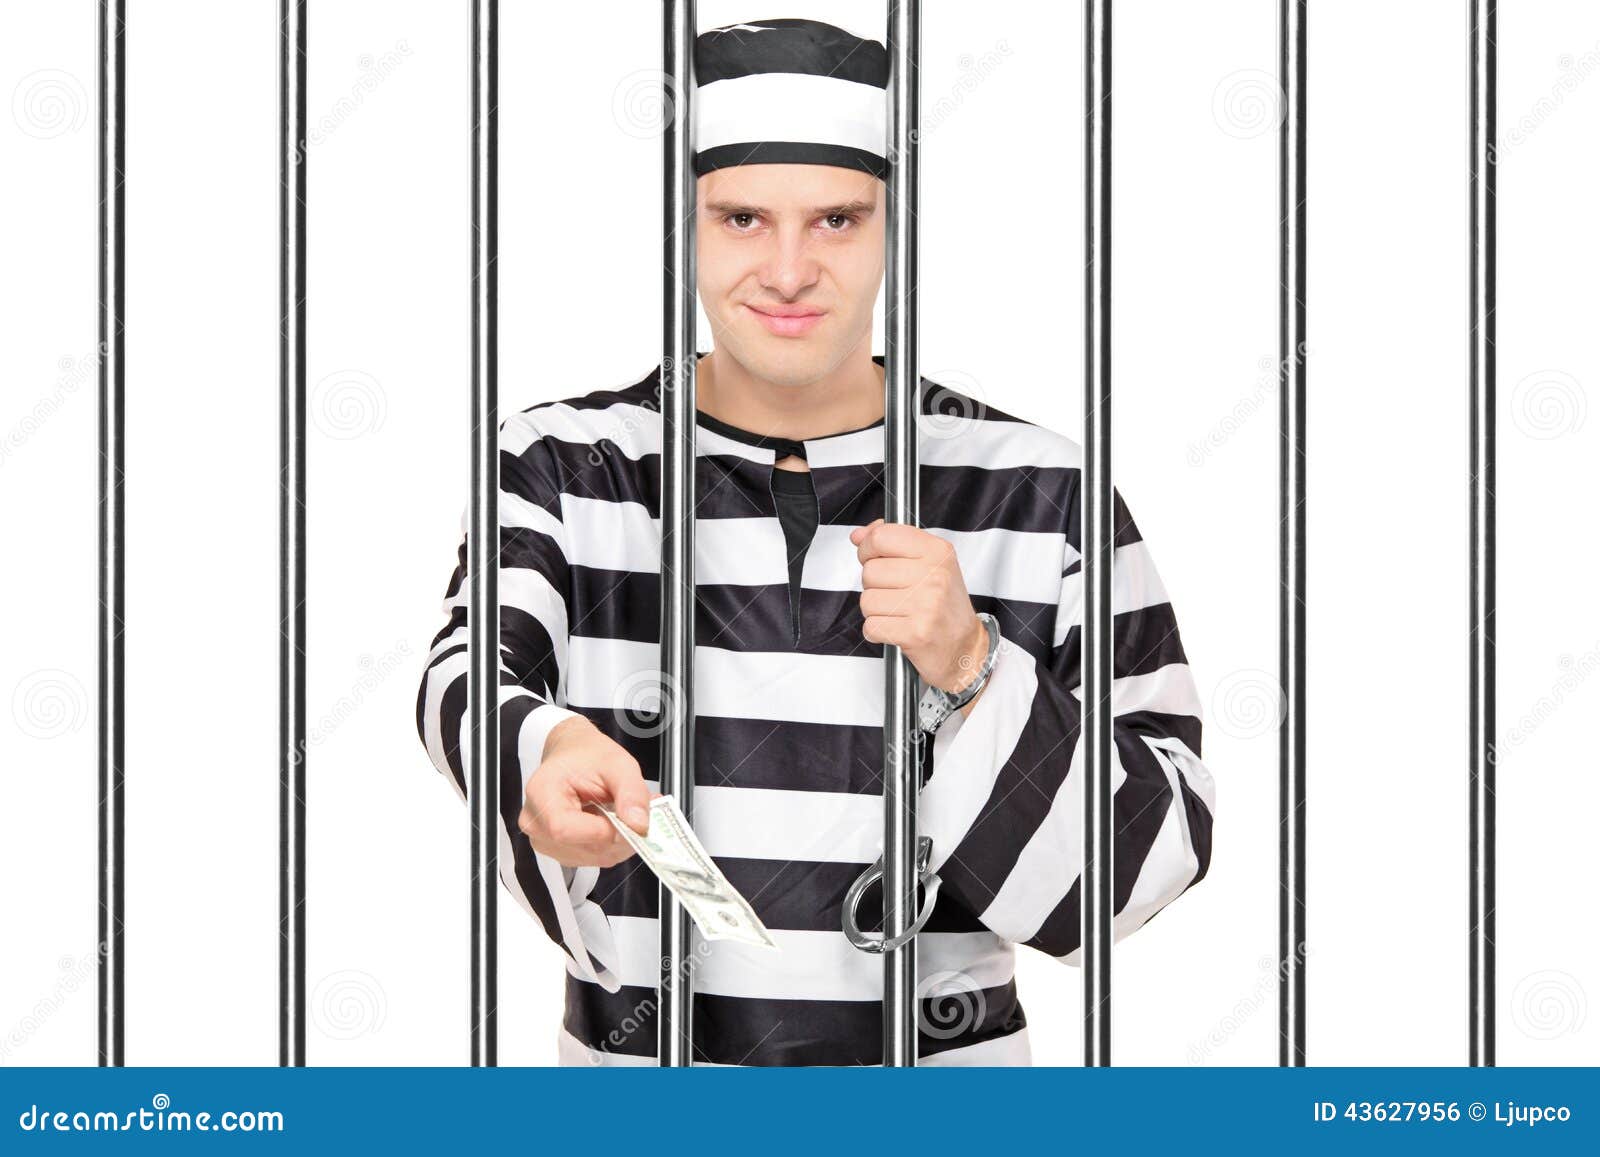 man behind bars clipart - photo #49